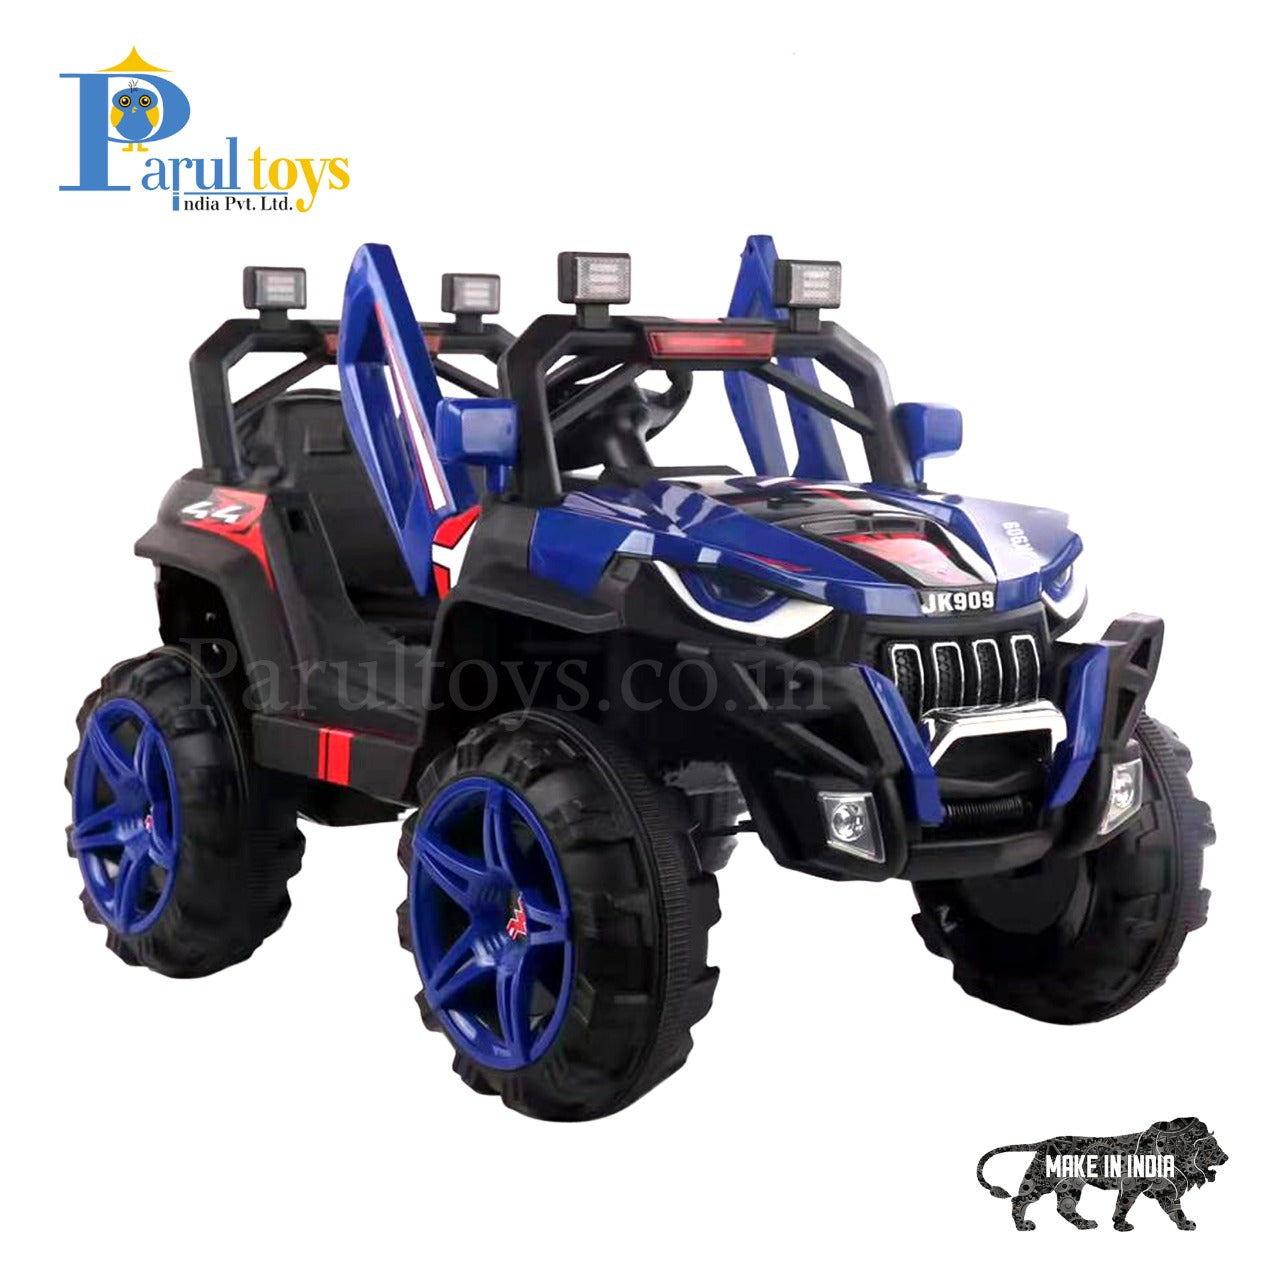 Azure ATV